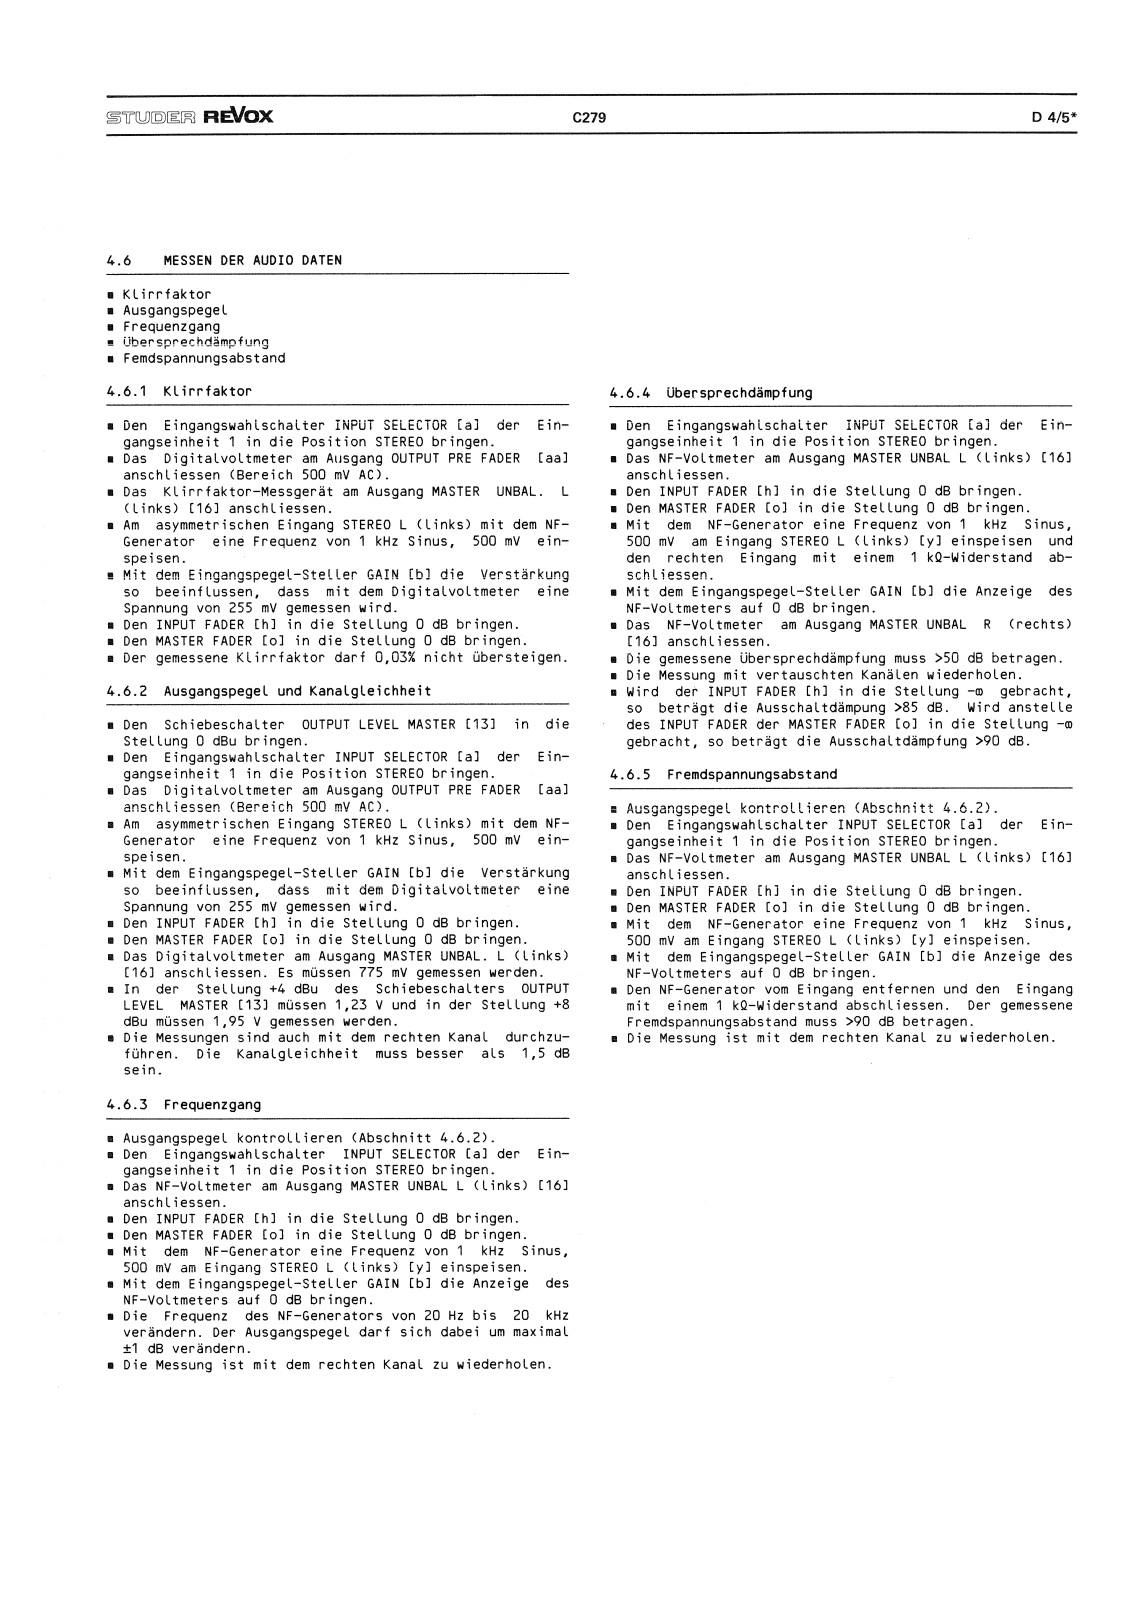 Service Manual-Anleitung für Revox C 279 